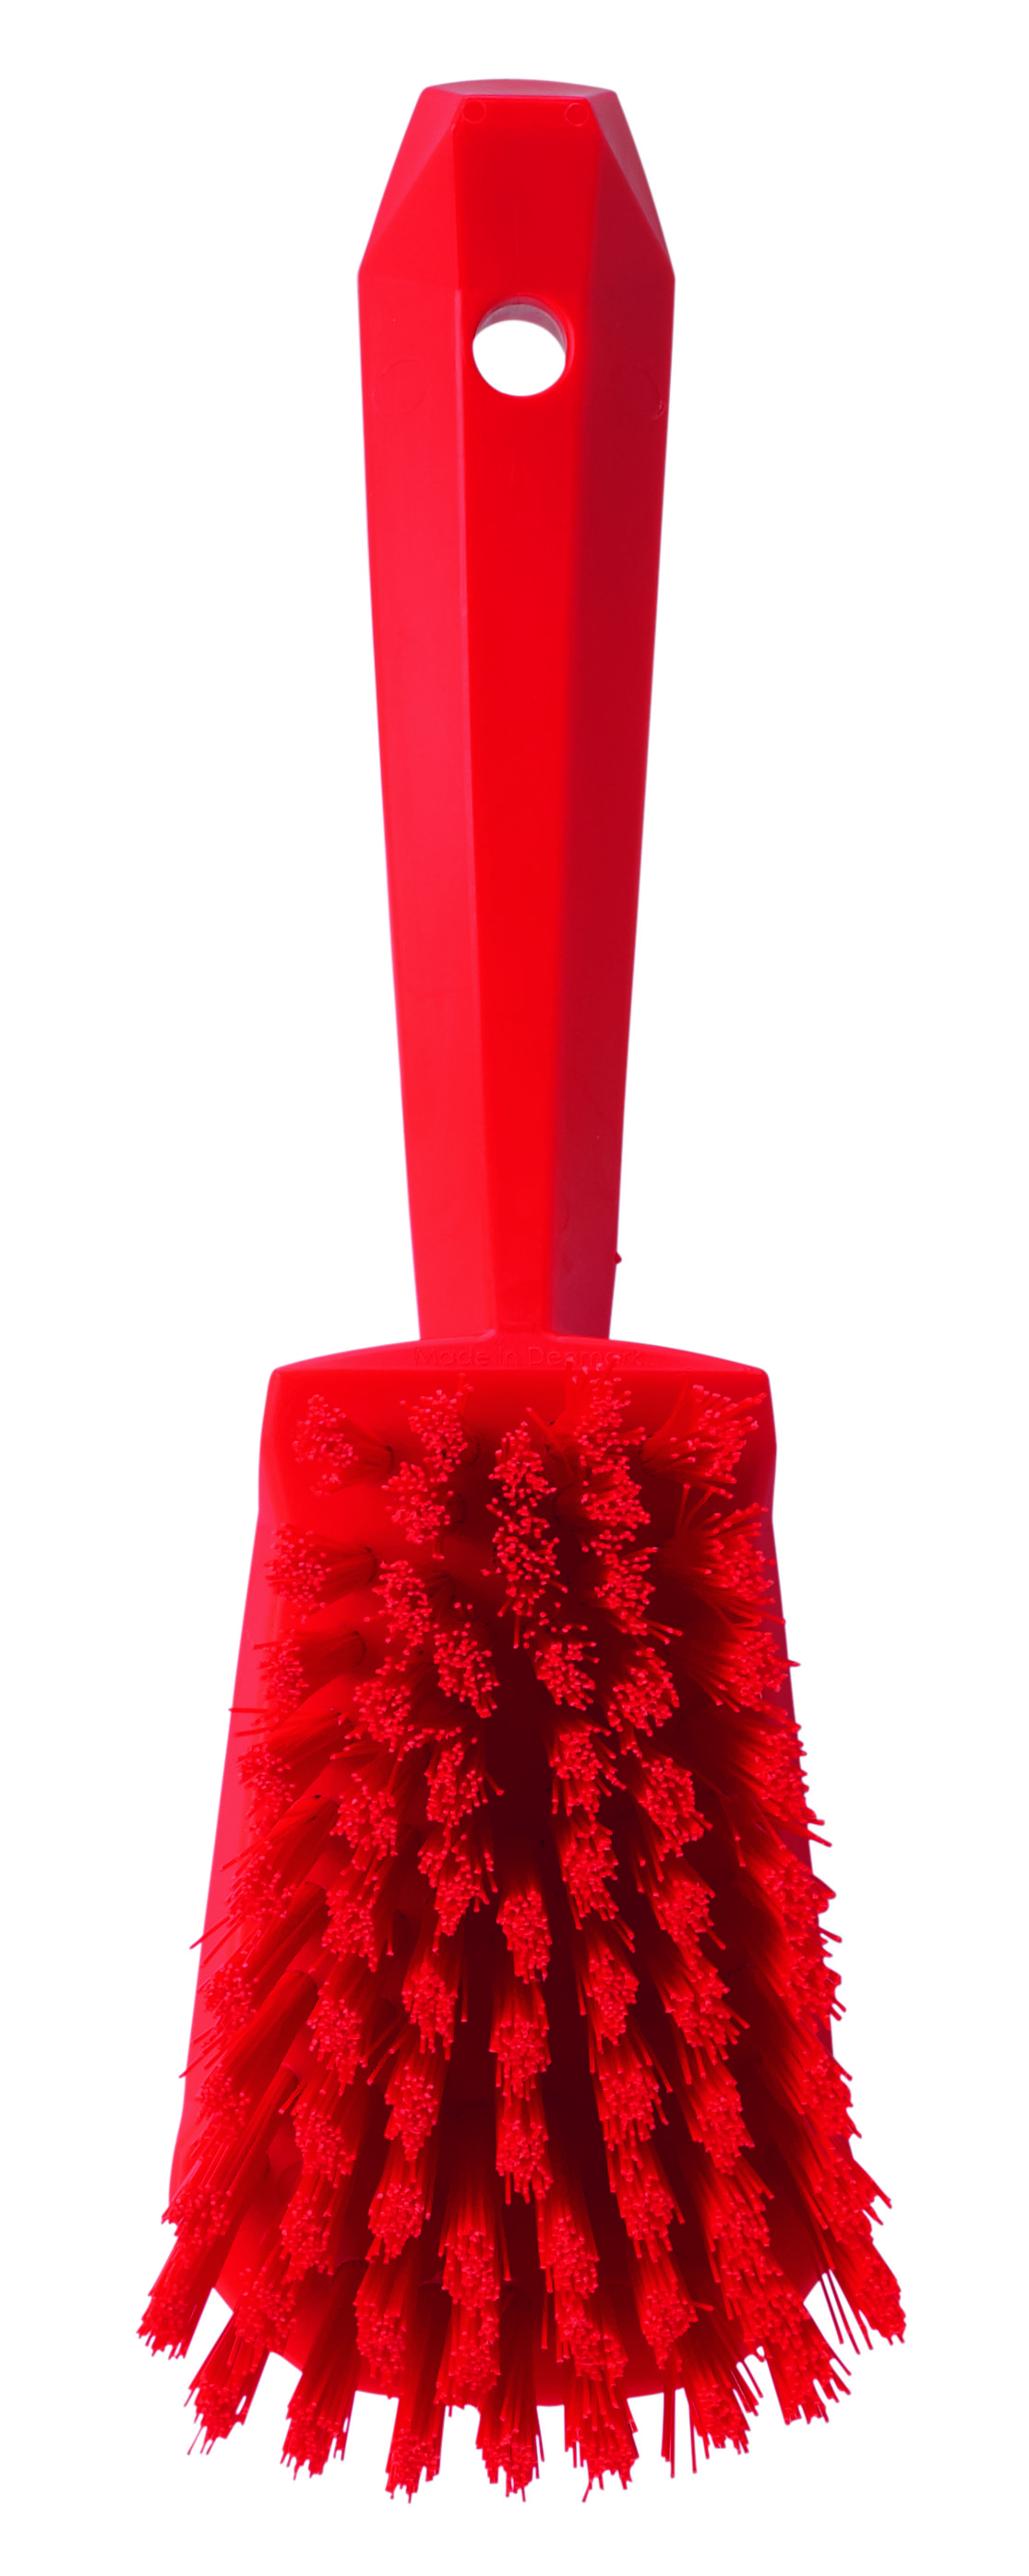 Щетка Vikan ручная для мытья с короткой ручкой жесткая, 270 мм, красная